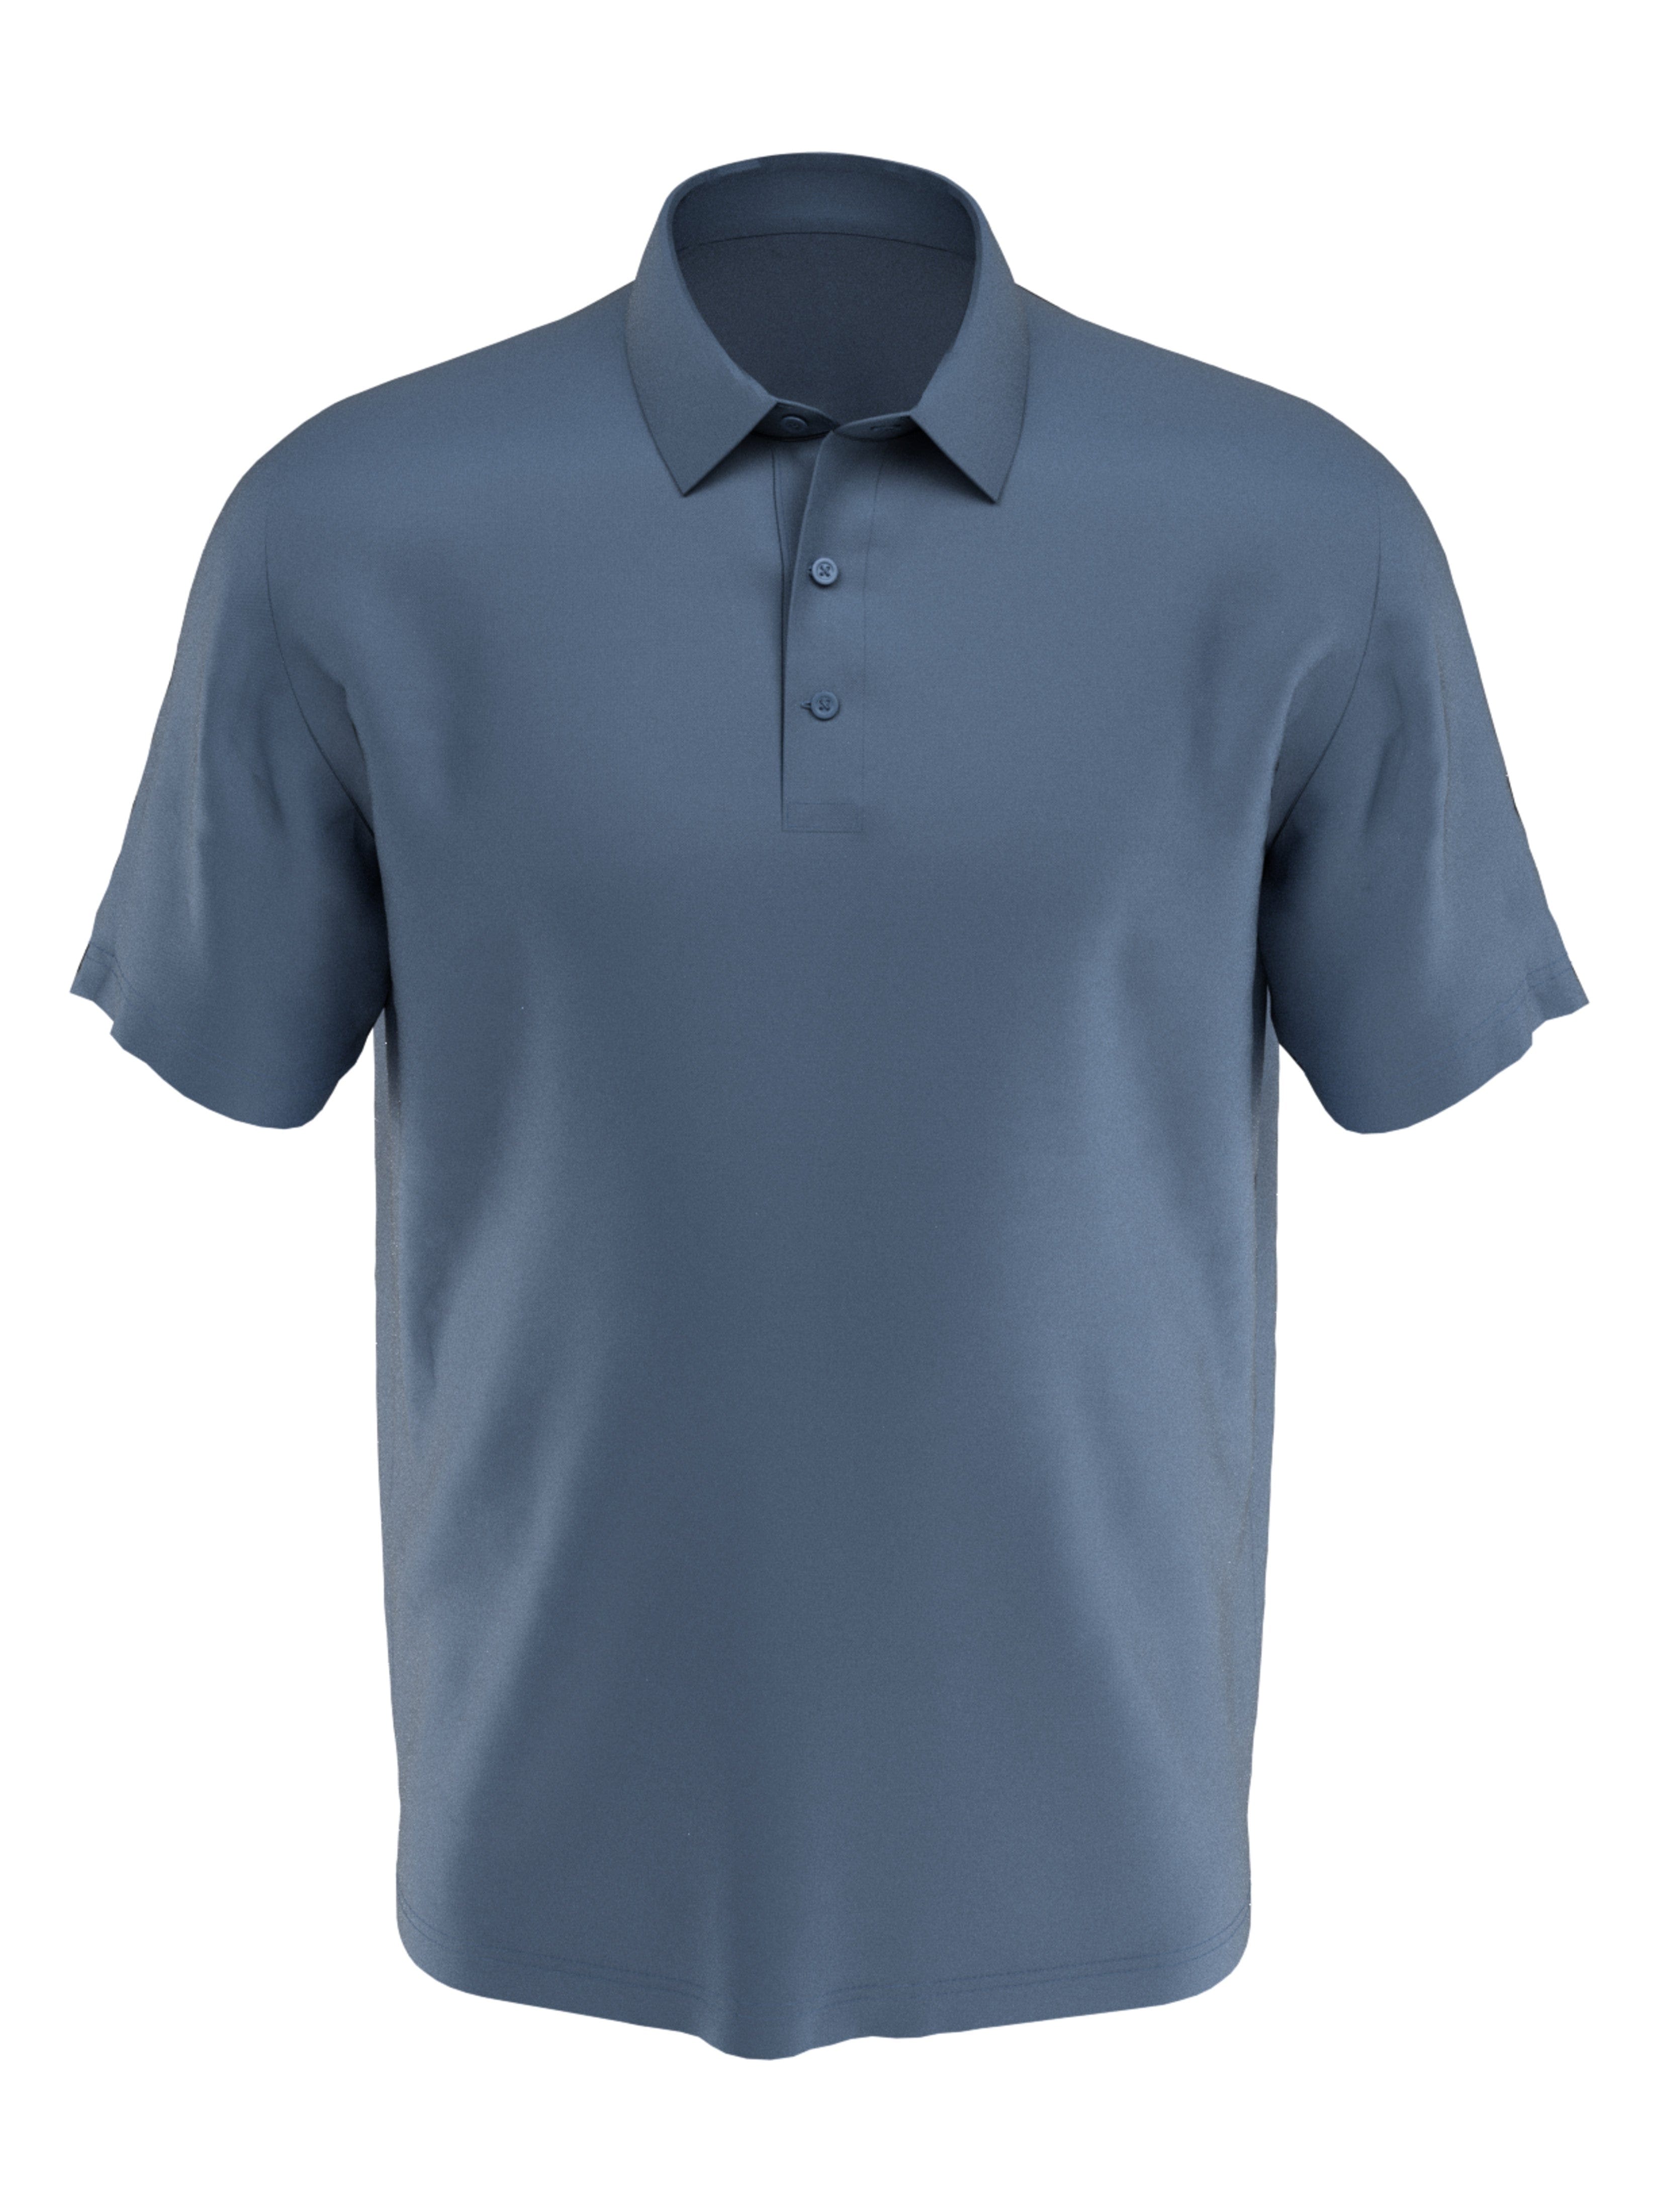 Callaway Apparel Mens Big & Tall Solid Swing Tech Golf Polo Shirt, Size 5XLT, Blue Horizon, Polyester/Elastane | Golf Apparel Shop